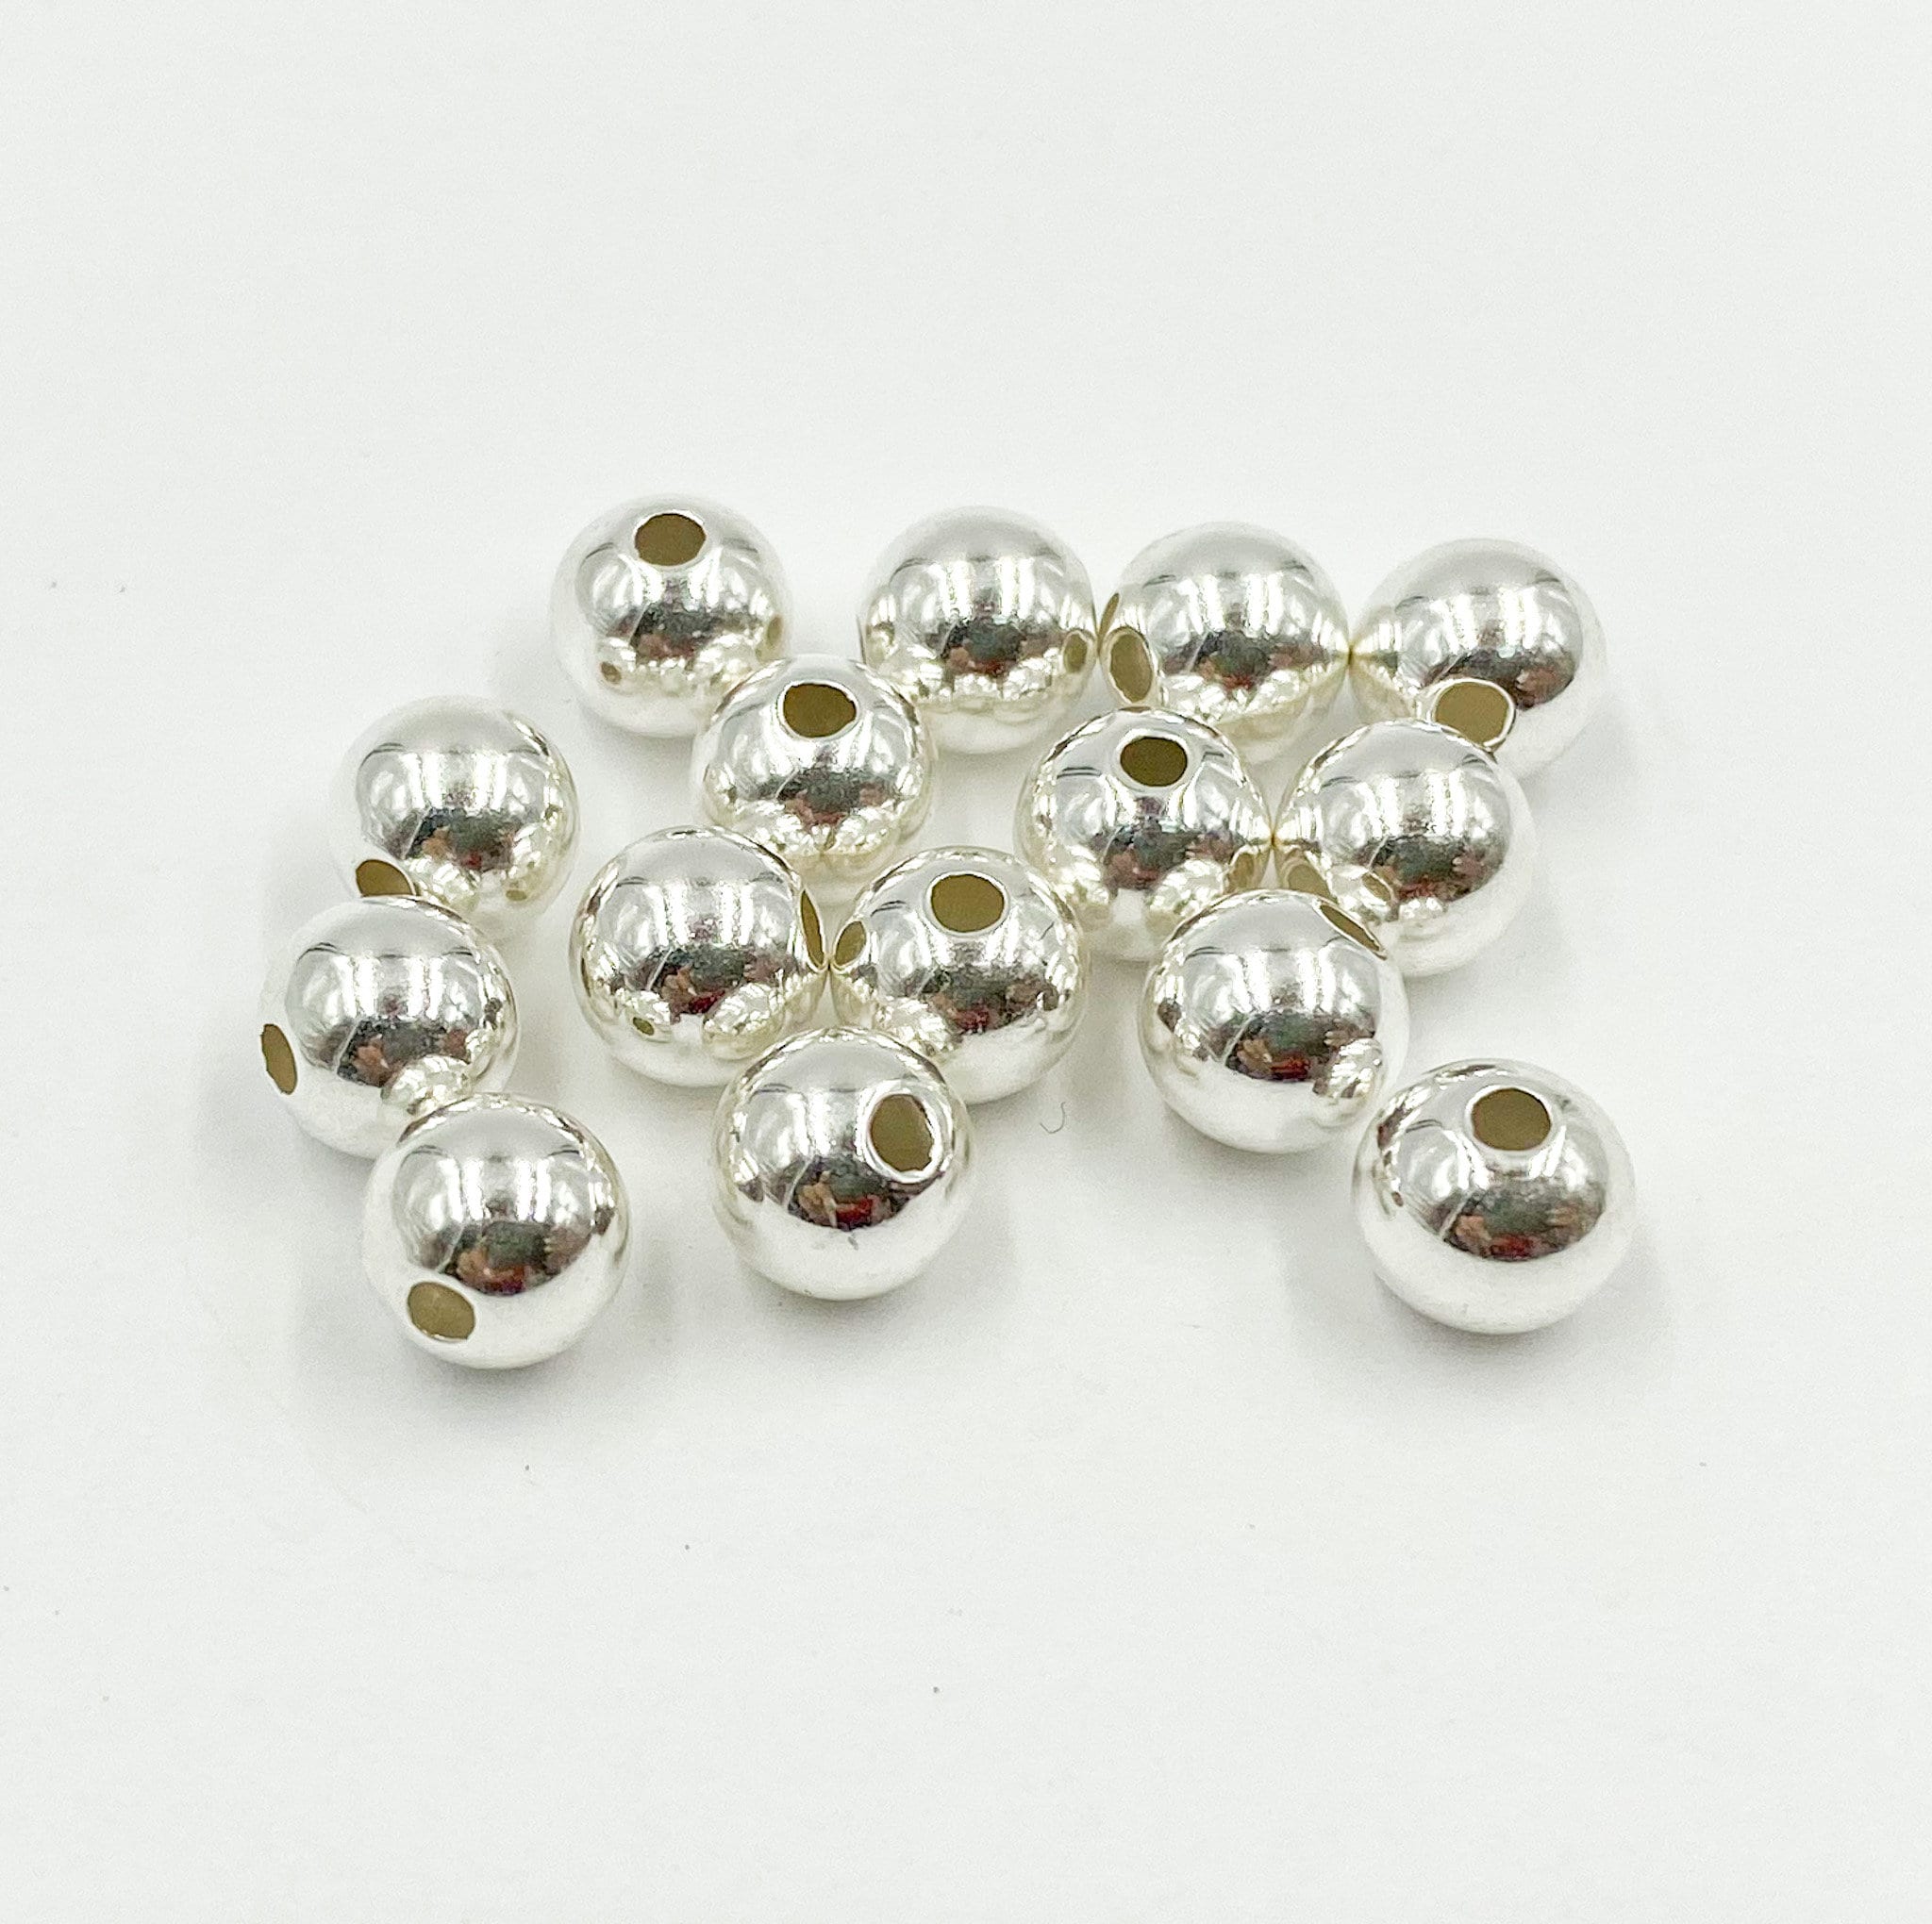  Aylifu 200pcs 6mm Silver Flat Round Spacer Beads